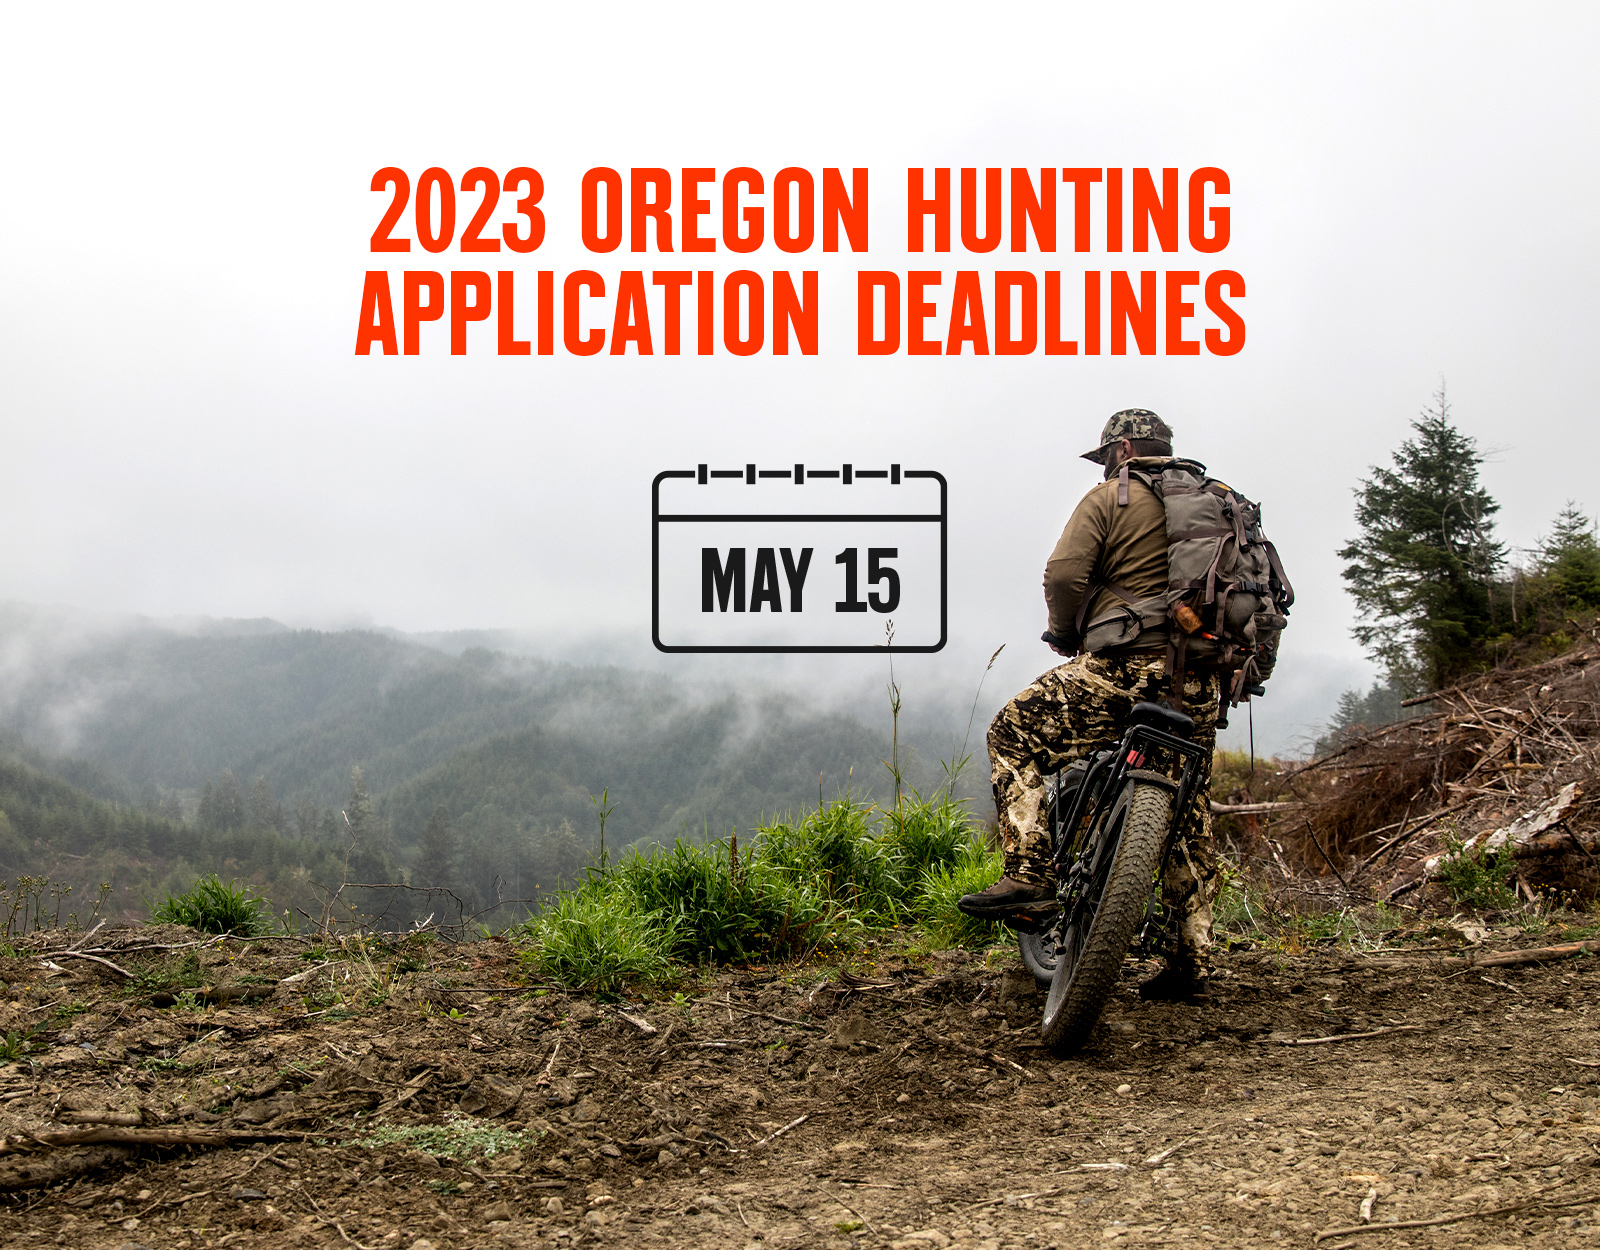 Oregon hunting application deadlines